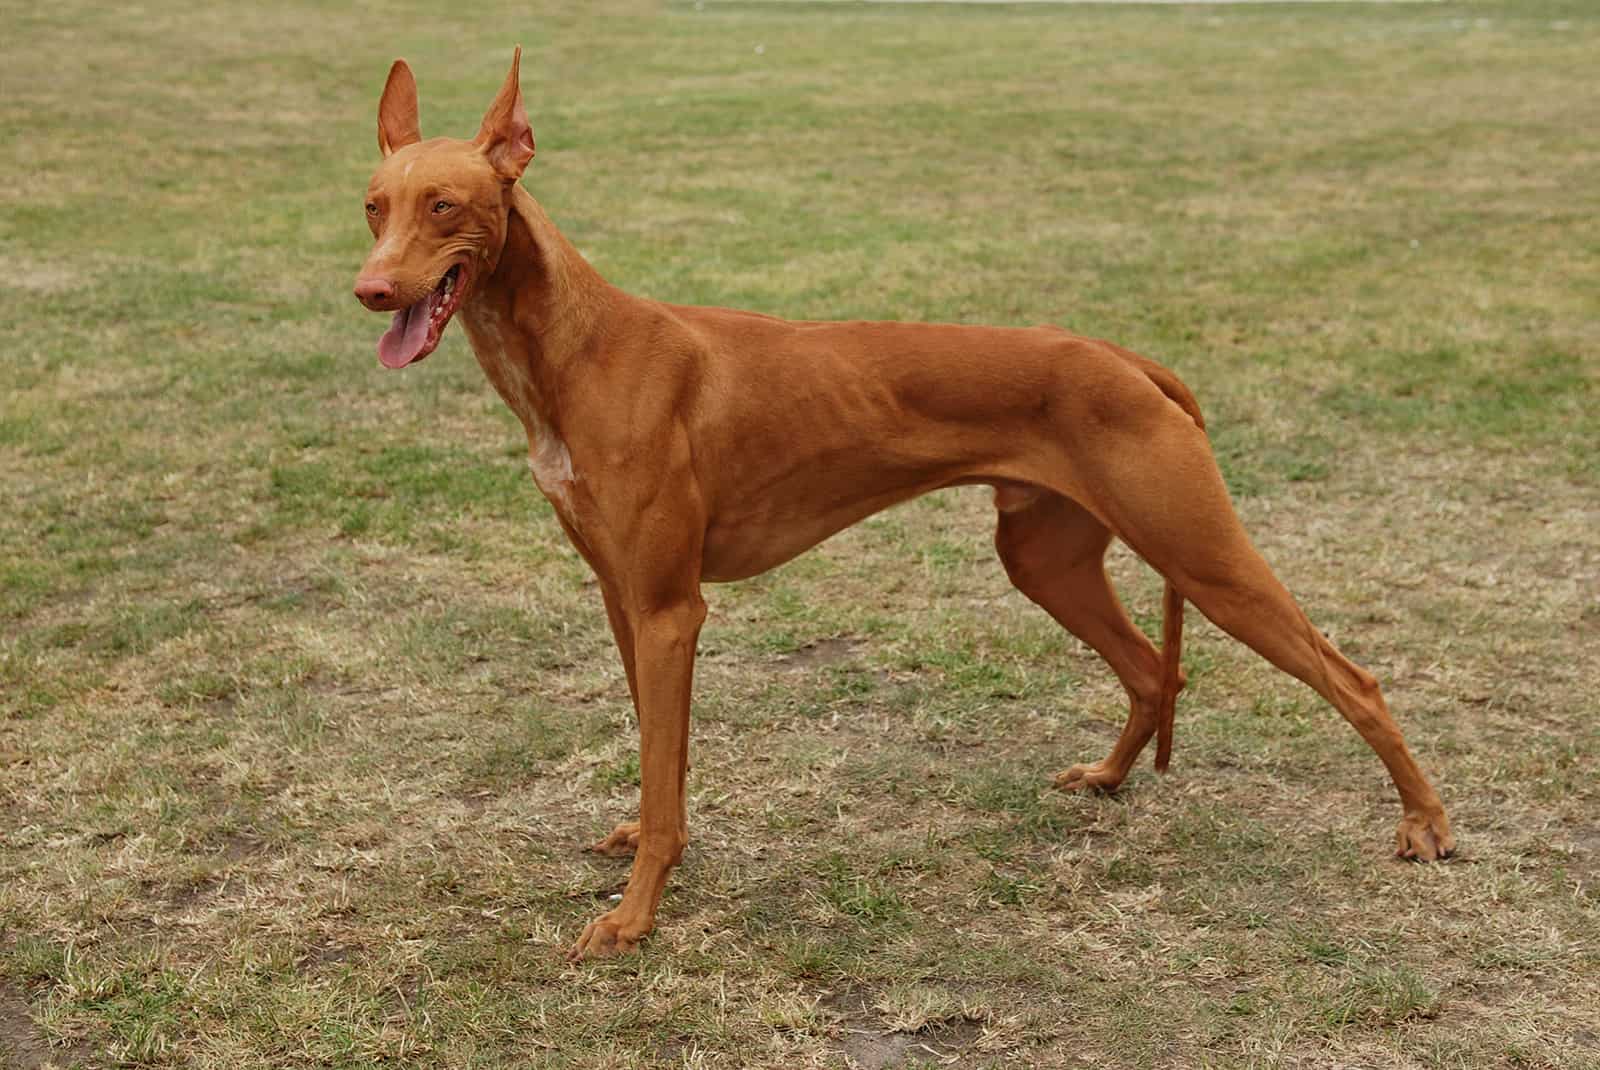 pharaoh hound dog standing on the grass